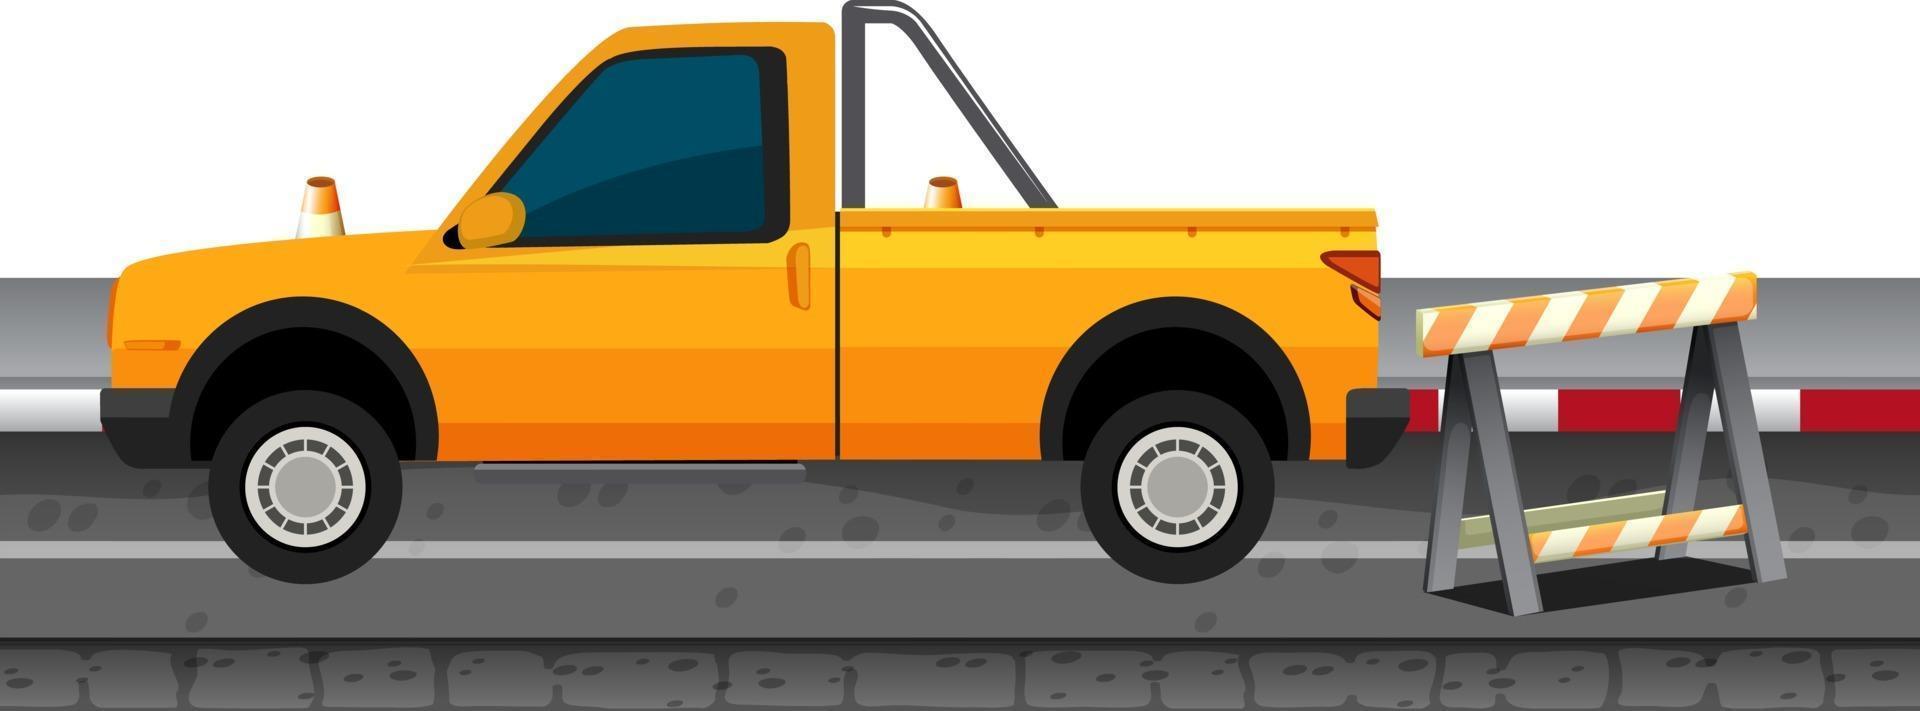 Yellow pickup truck on the street scene vector